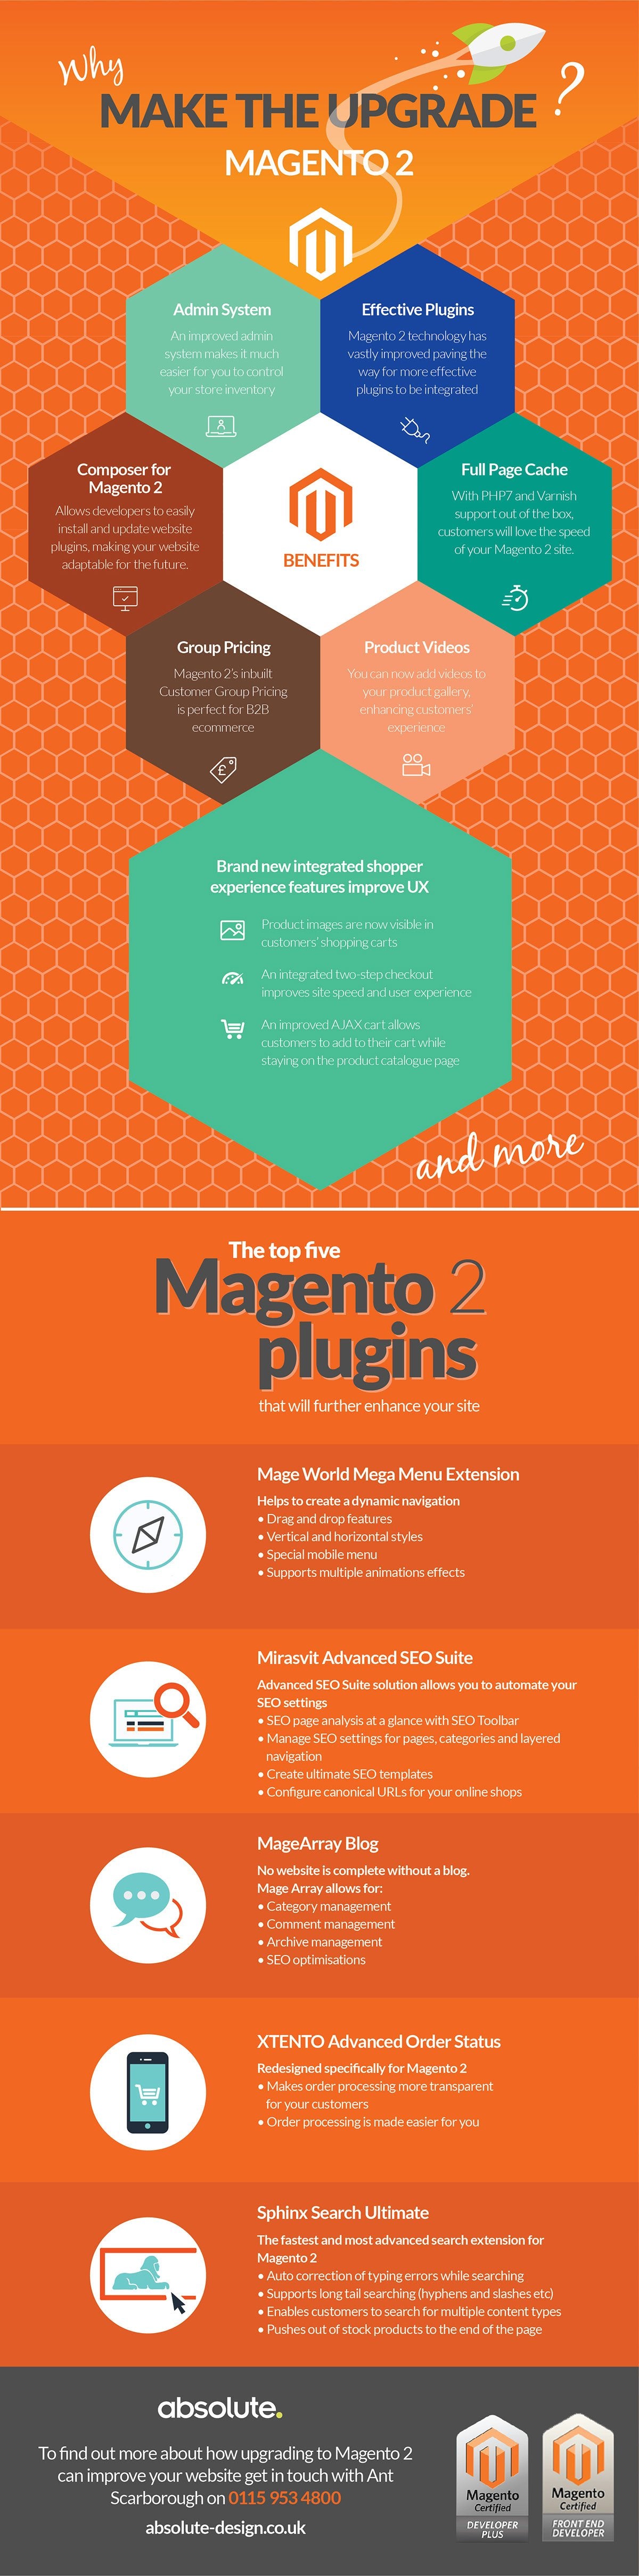 Magento2 upgrade infographic